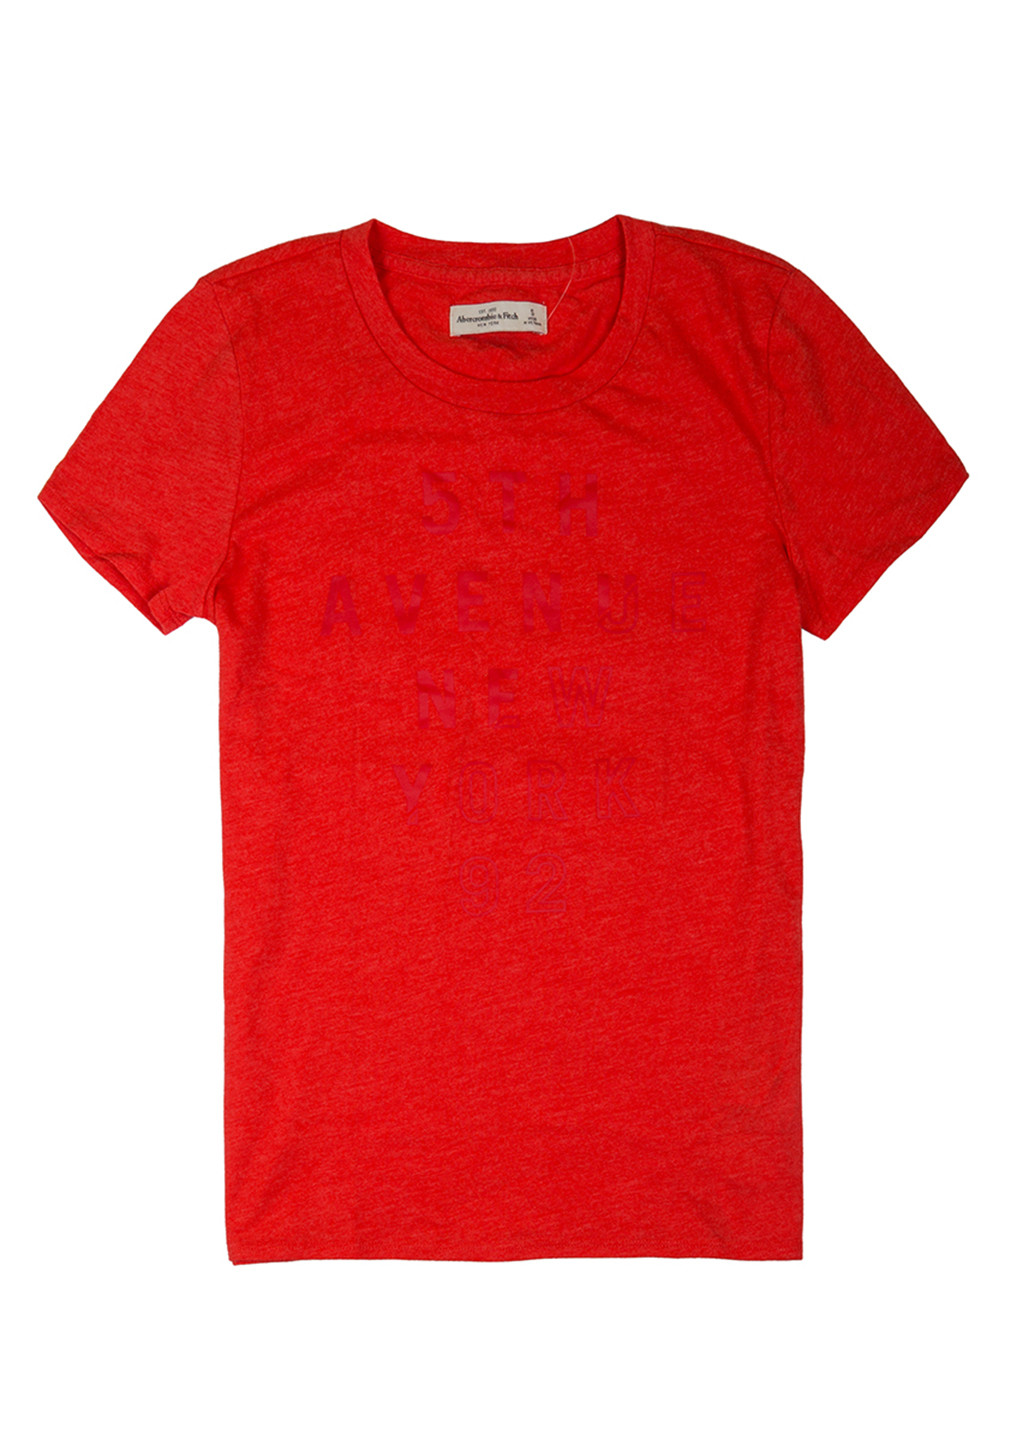 Помаранчево-червона літня футболка Abercrombie & Fitch